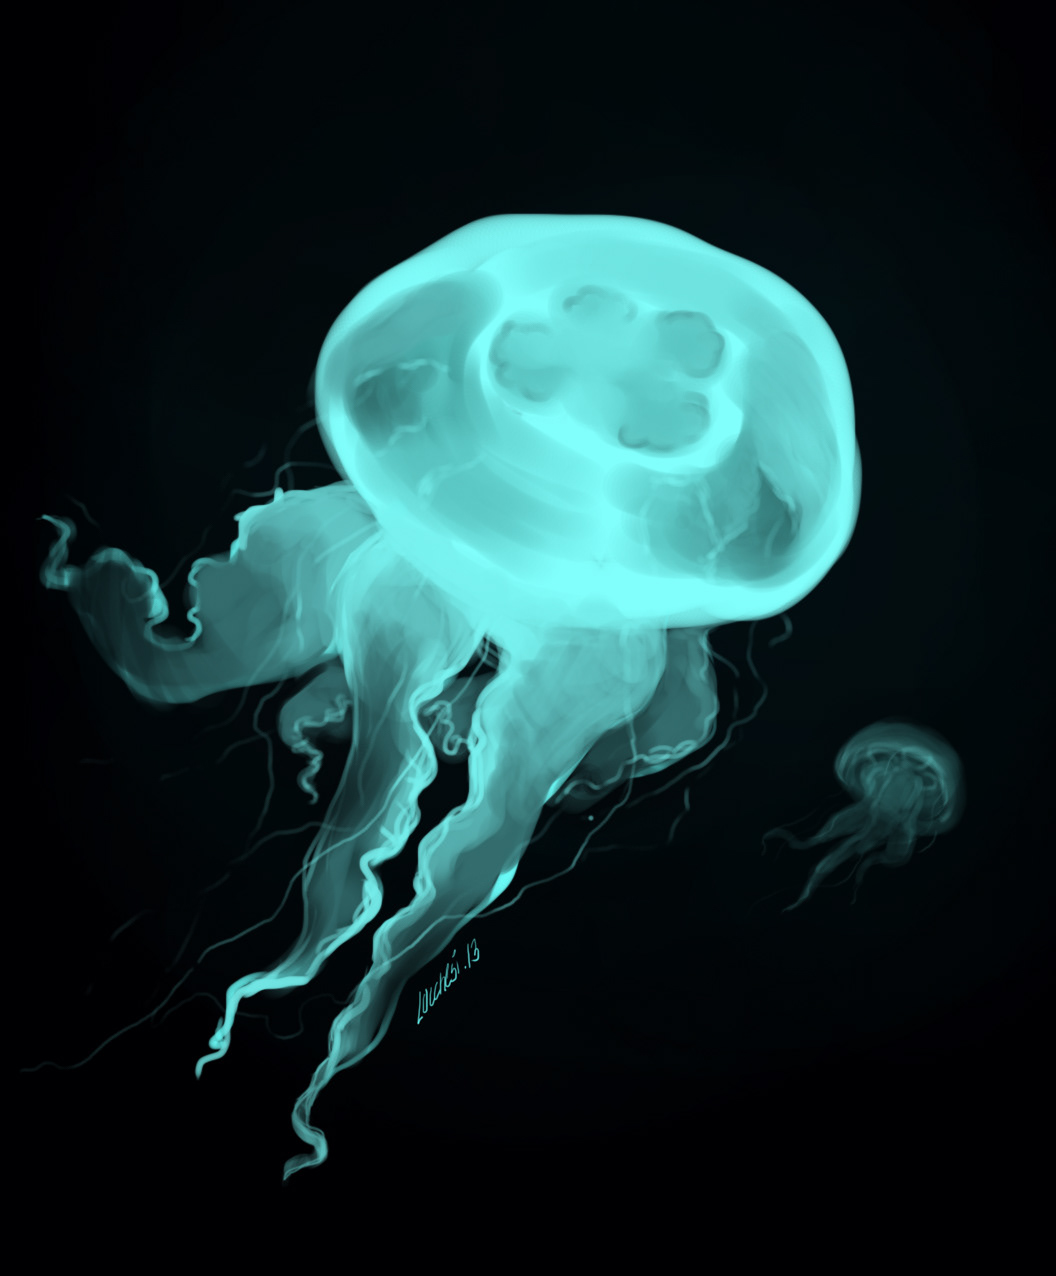 jellyfish deep sea Ocean surreal fantasy fairy tale